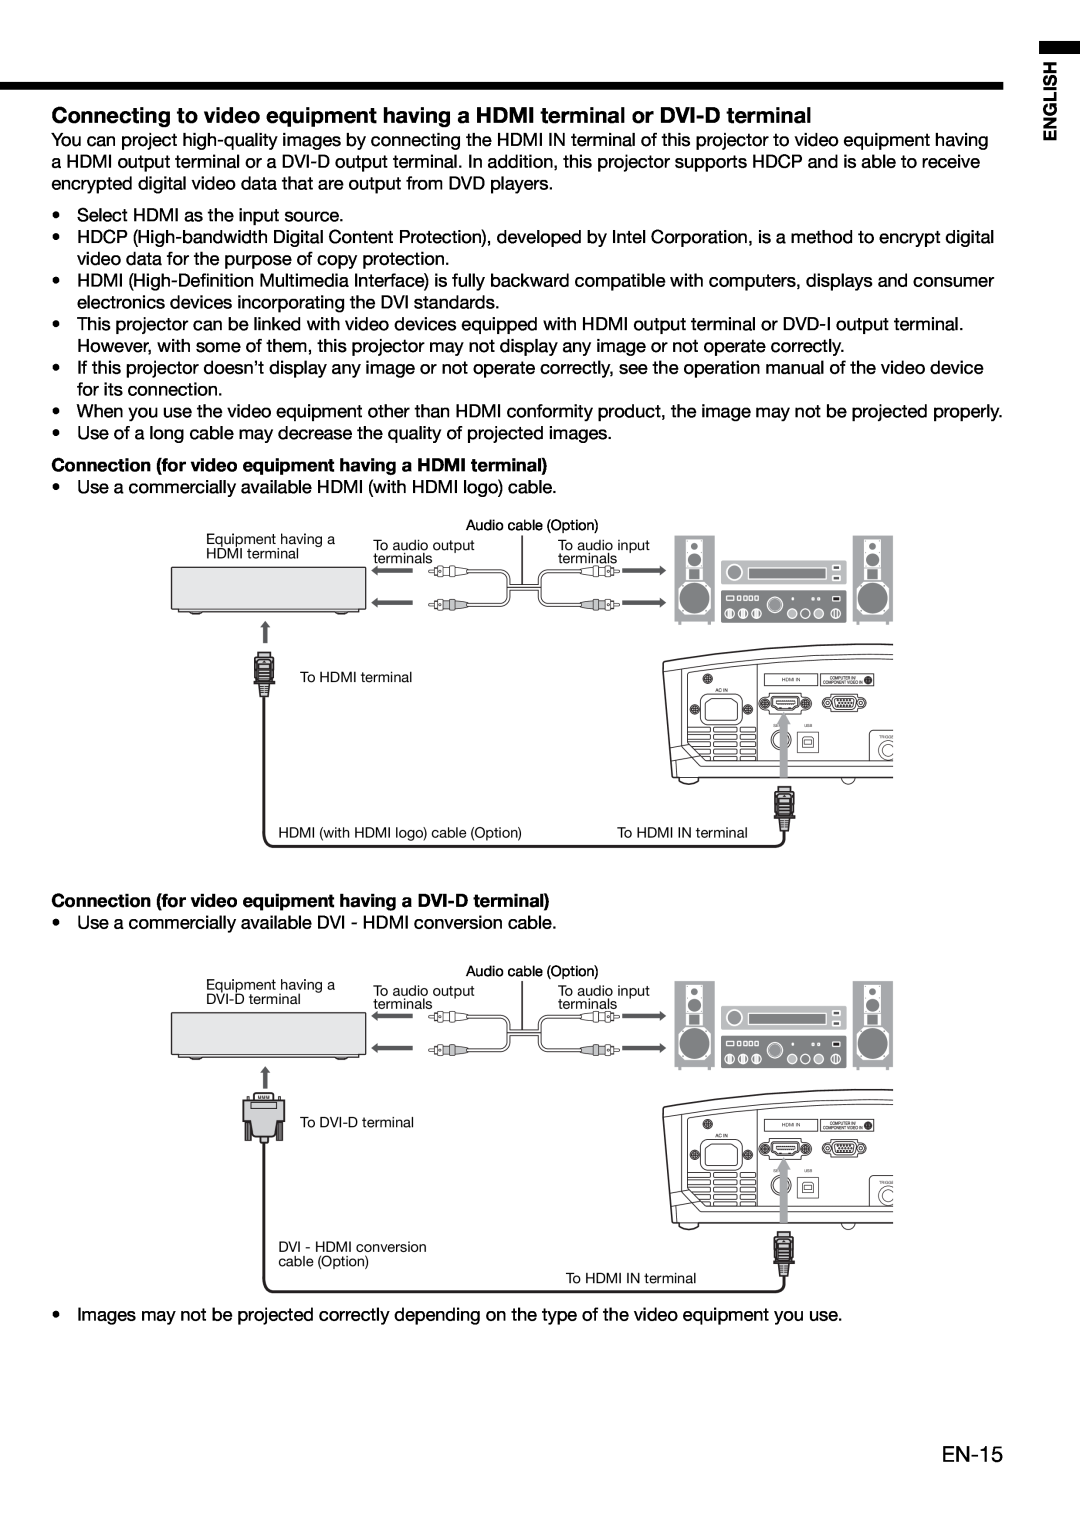 Mitsubishi Electronics HC3000 user manual EN-15, Connection for video equipment having a HDMI terminal, English 